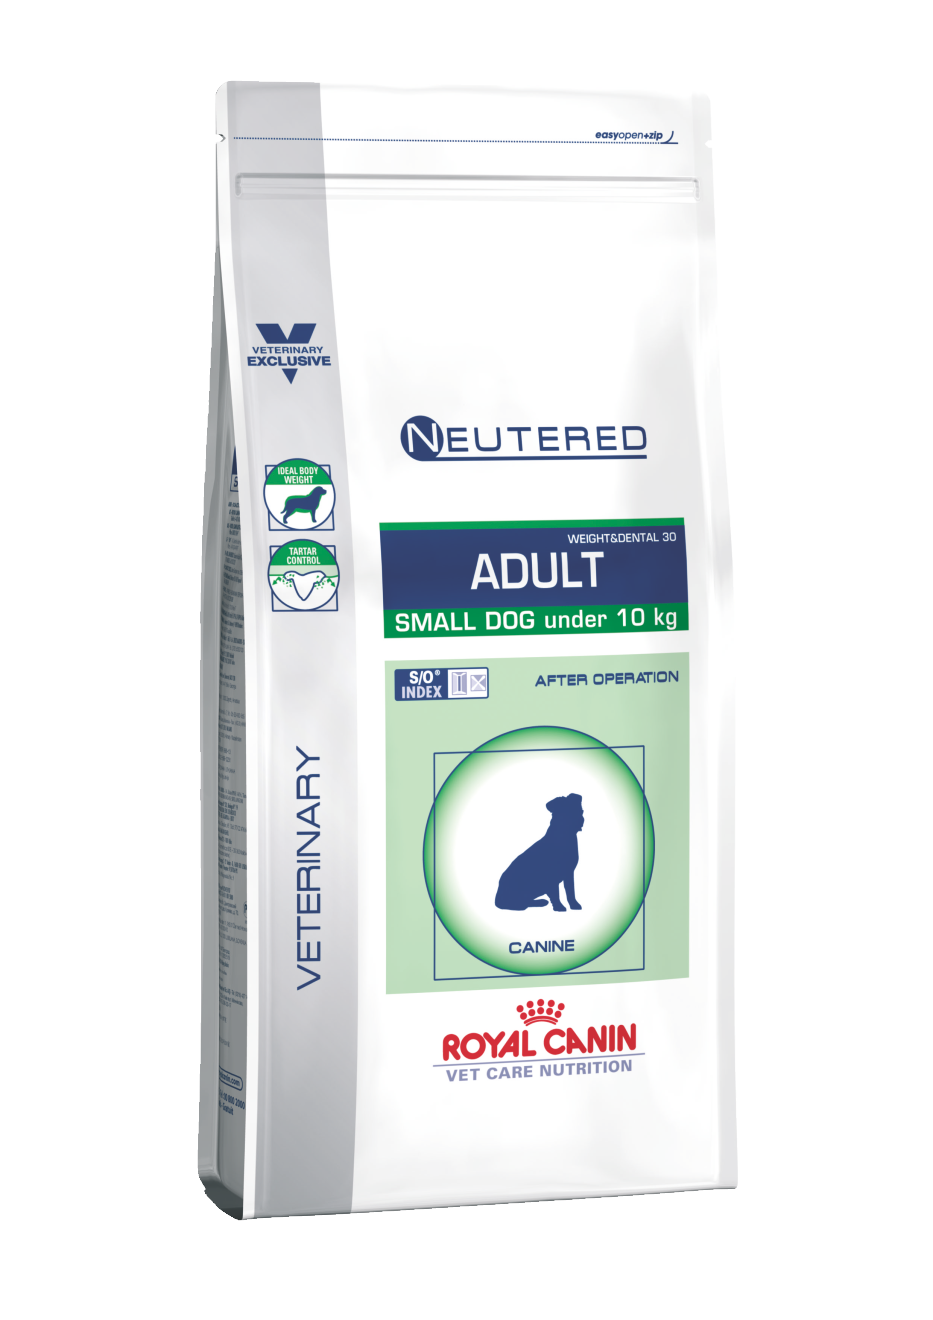 royal canin neutered small dog under 10kg